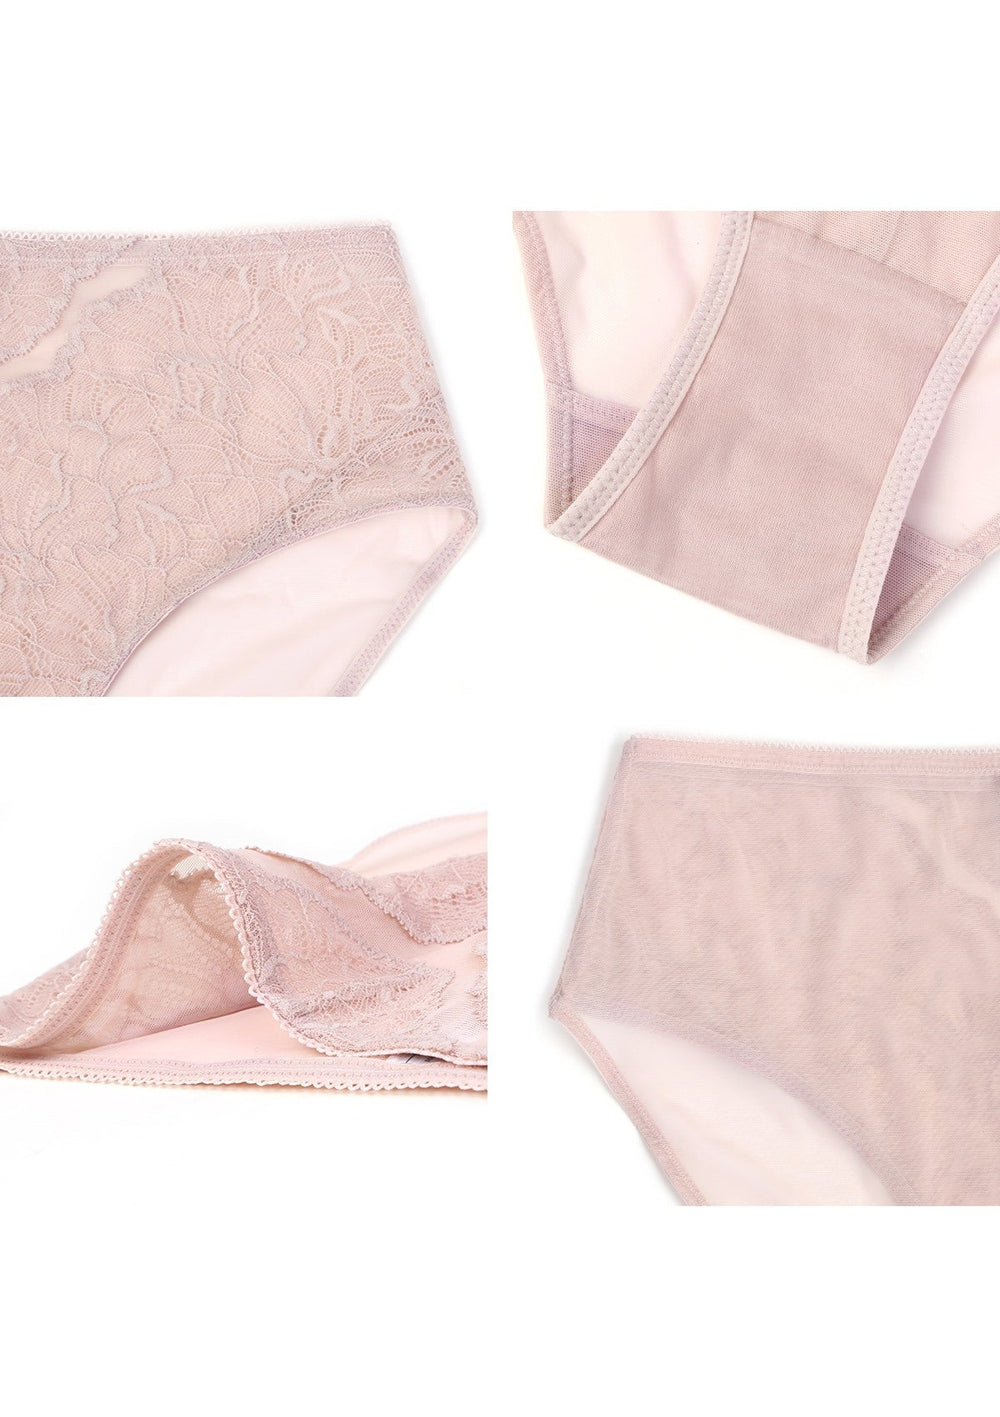 HSIA Polka Dot Super Soft Lace Back Cheeky Panties 3 Pack